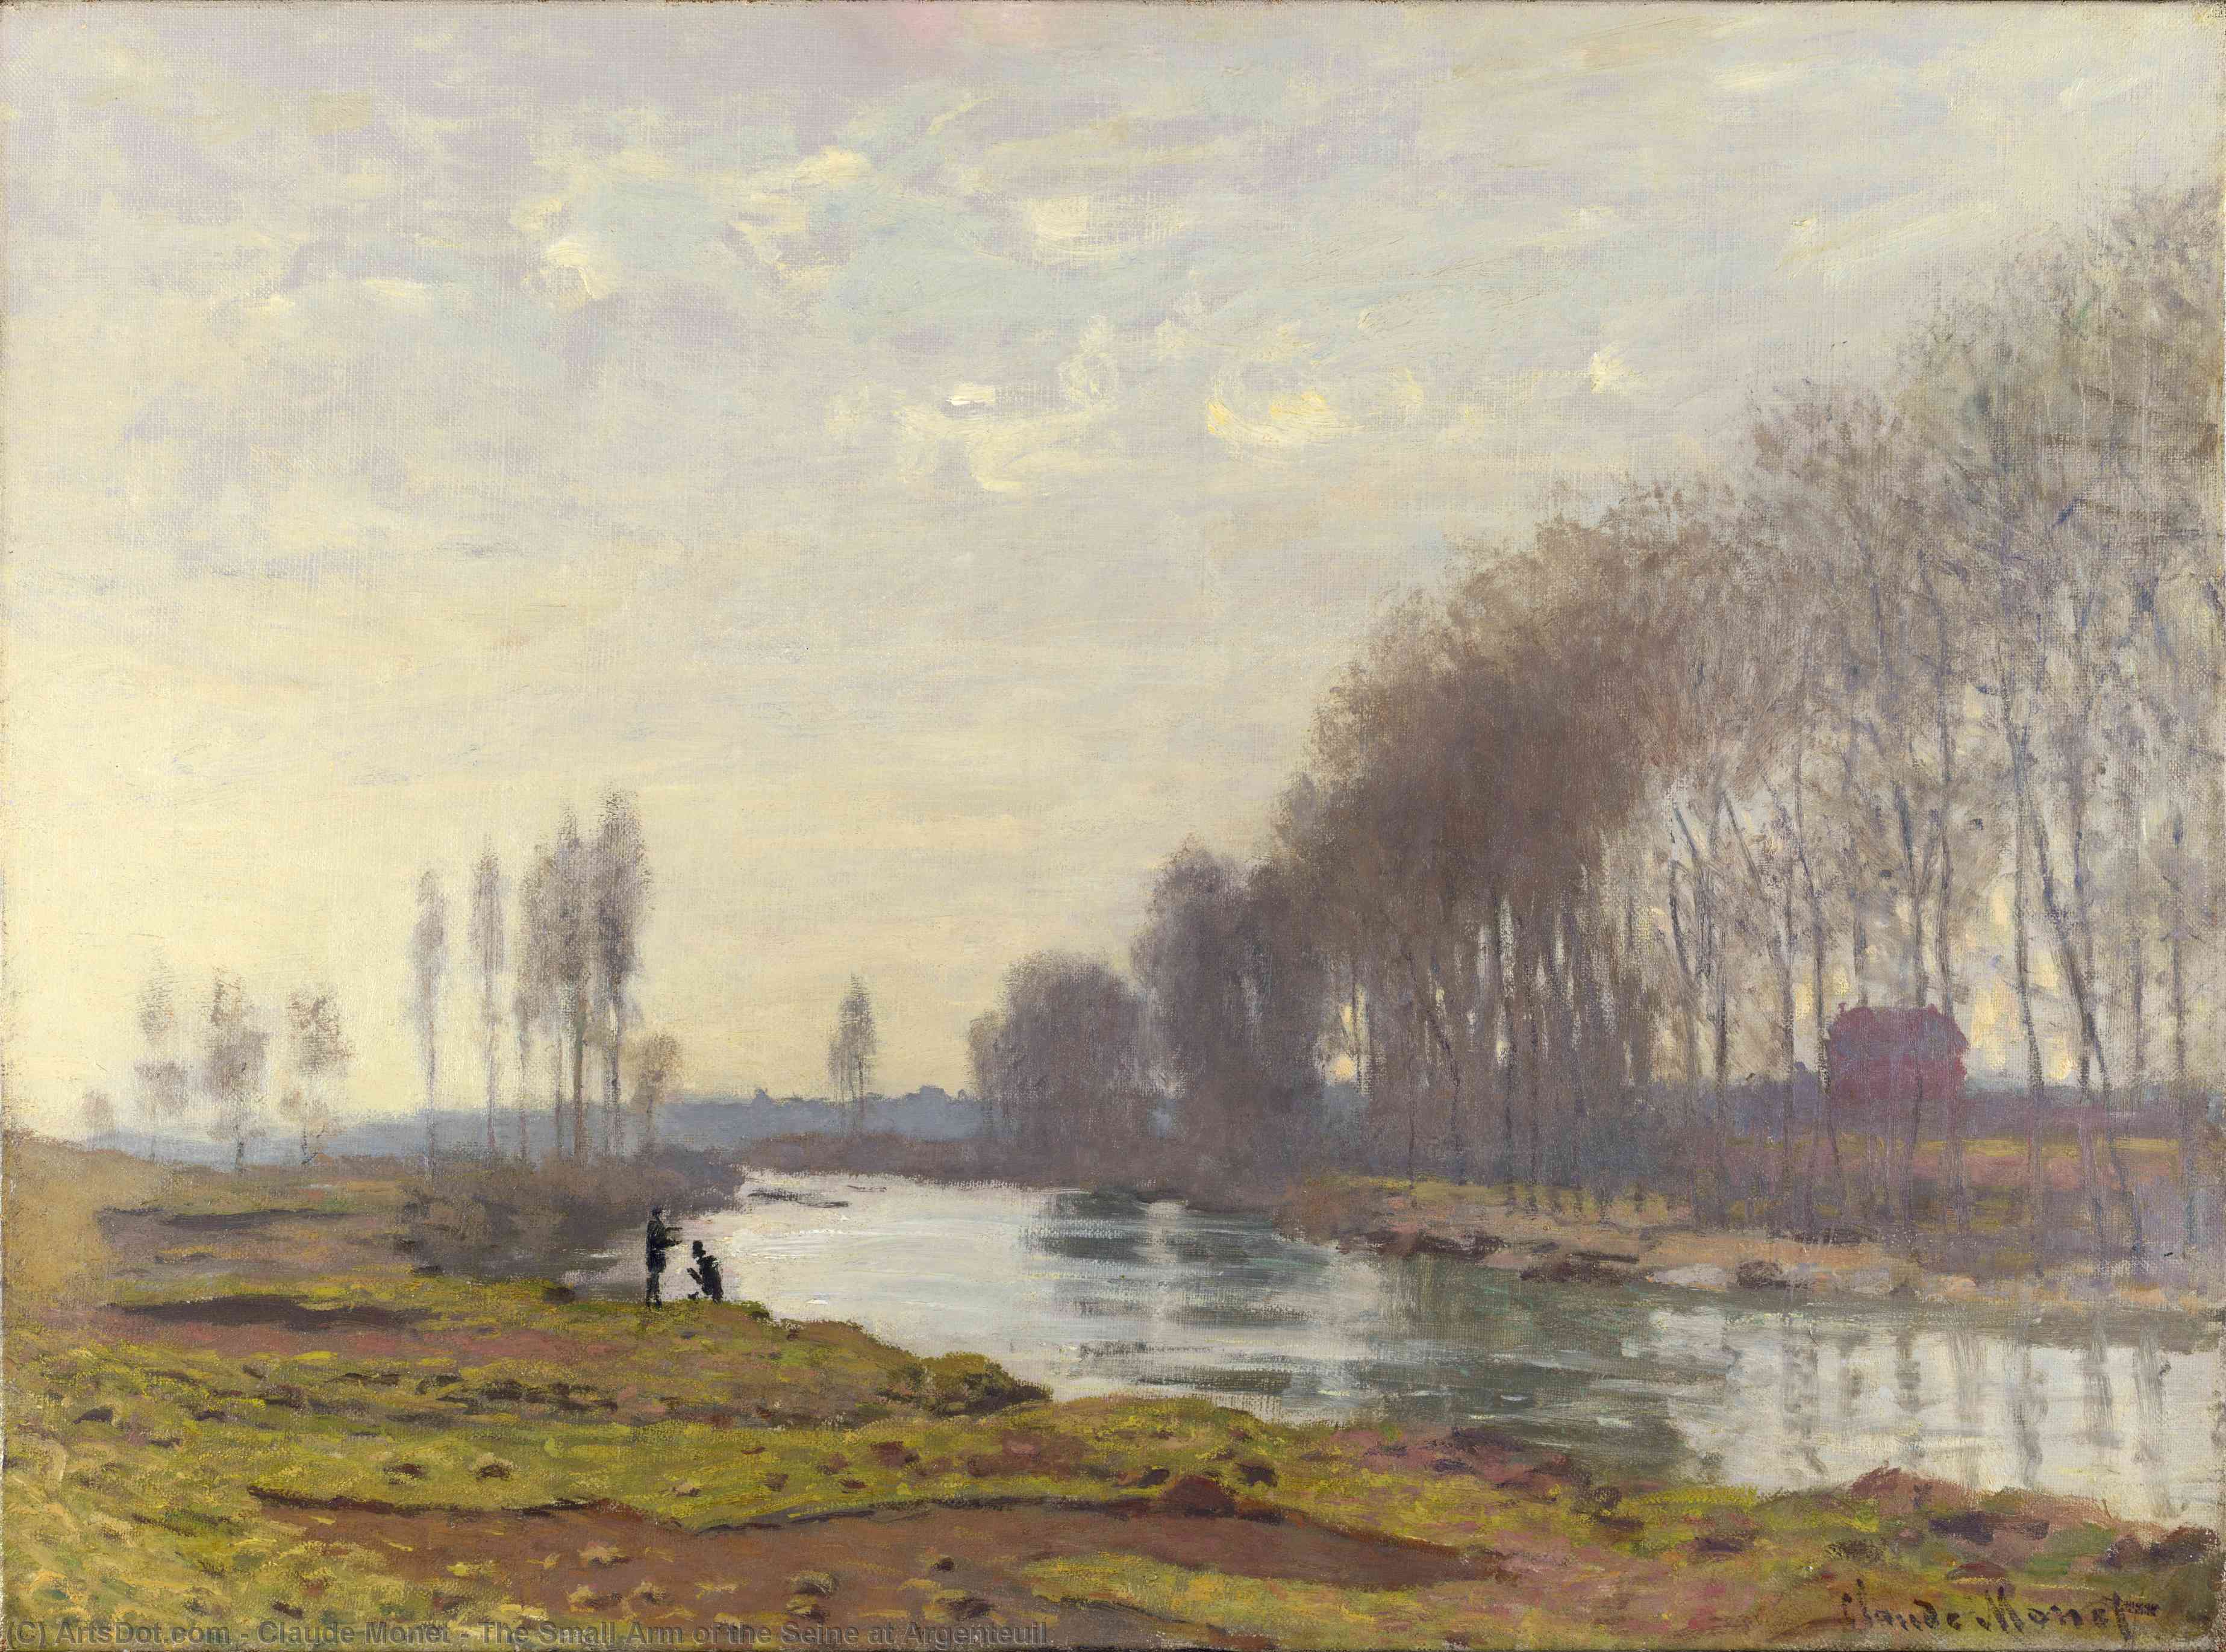 Wikioo.org - Encyklopedia Sztuk Pięknych - Malarstwo, Grafika Claude Monet - The Small Arm of the Seine at Argenteuil